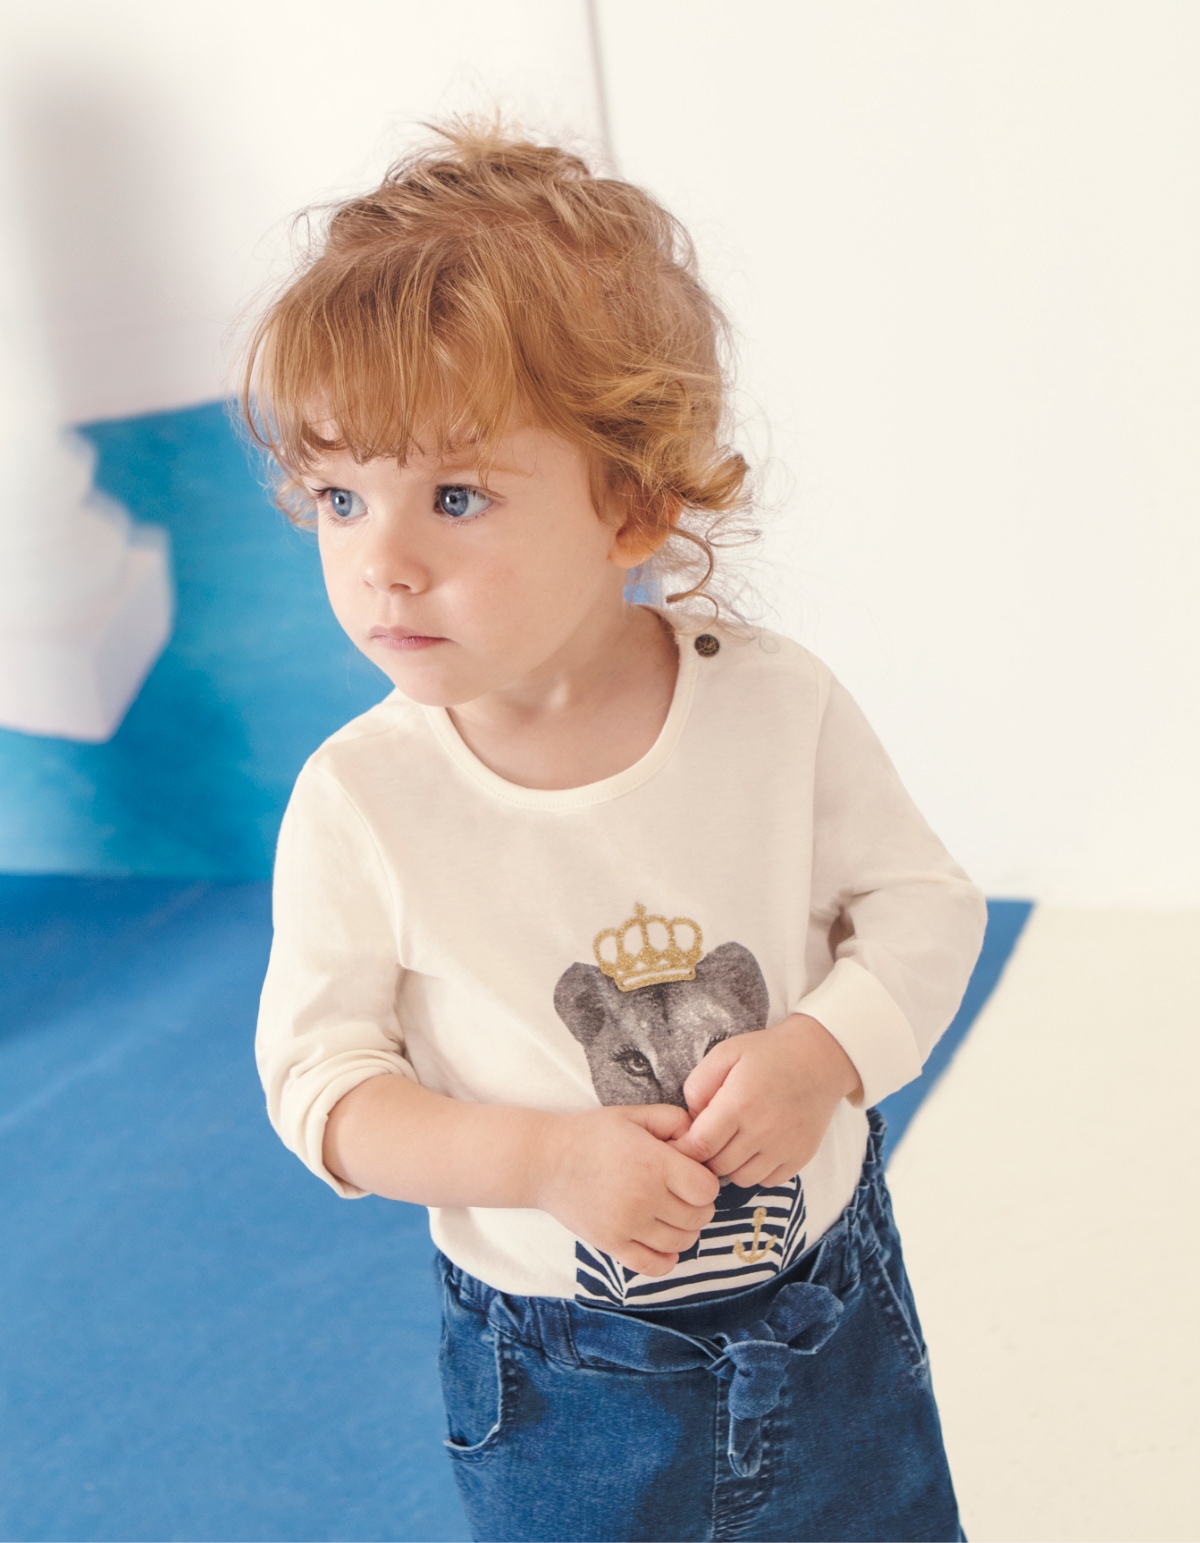 Baby girls’ ecru organic lion-sailor top T-shirt